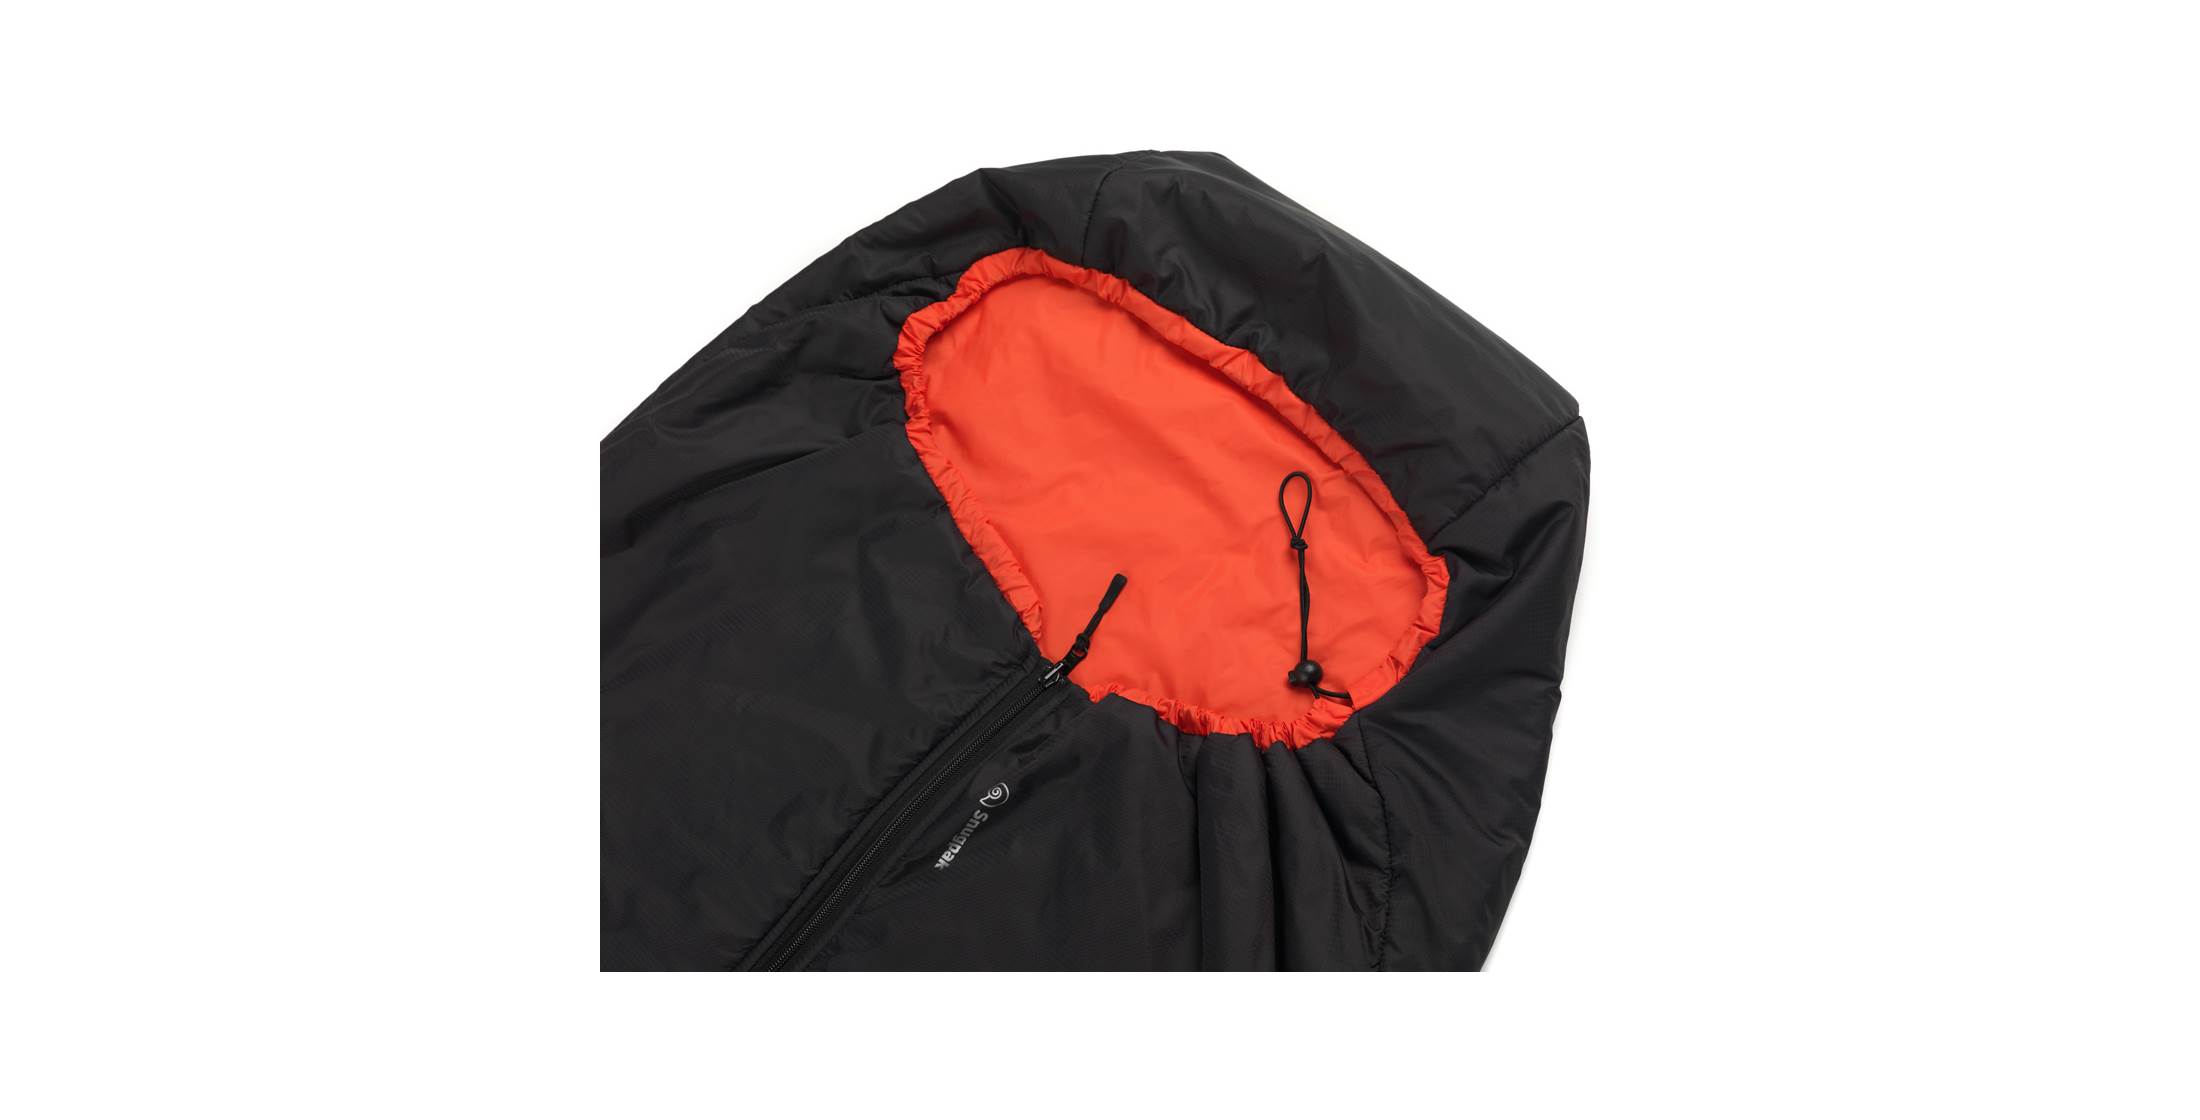 Snugpak Venture Adventure Racing Insulated Softie Sleeping Bag E-Outdoor